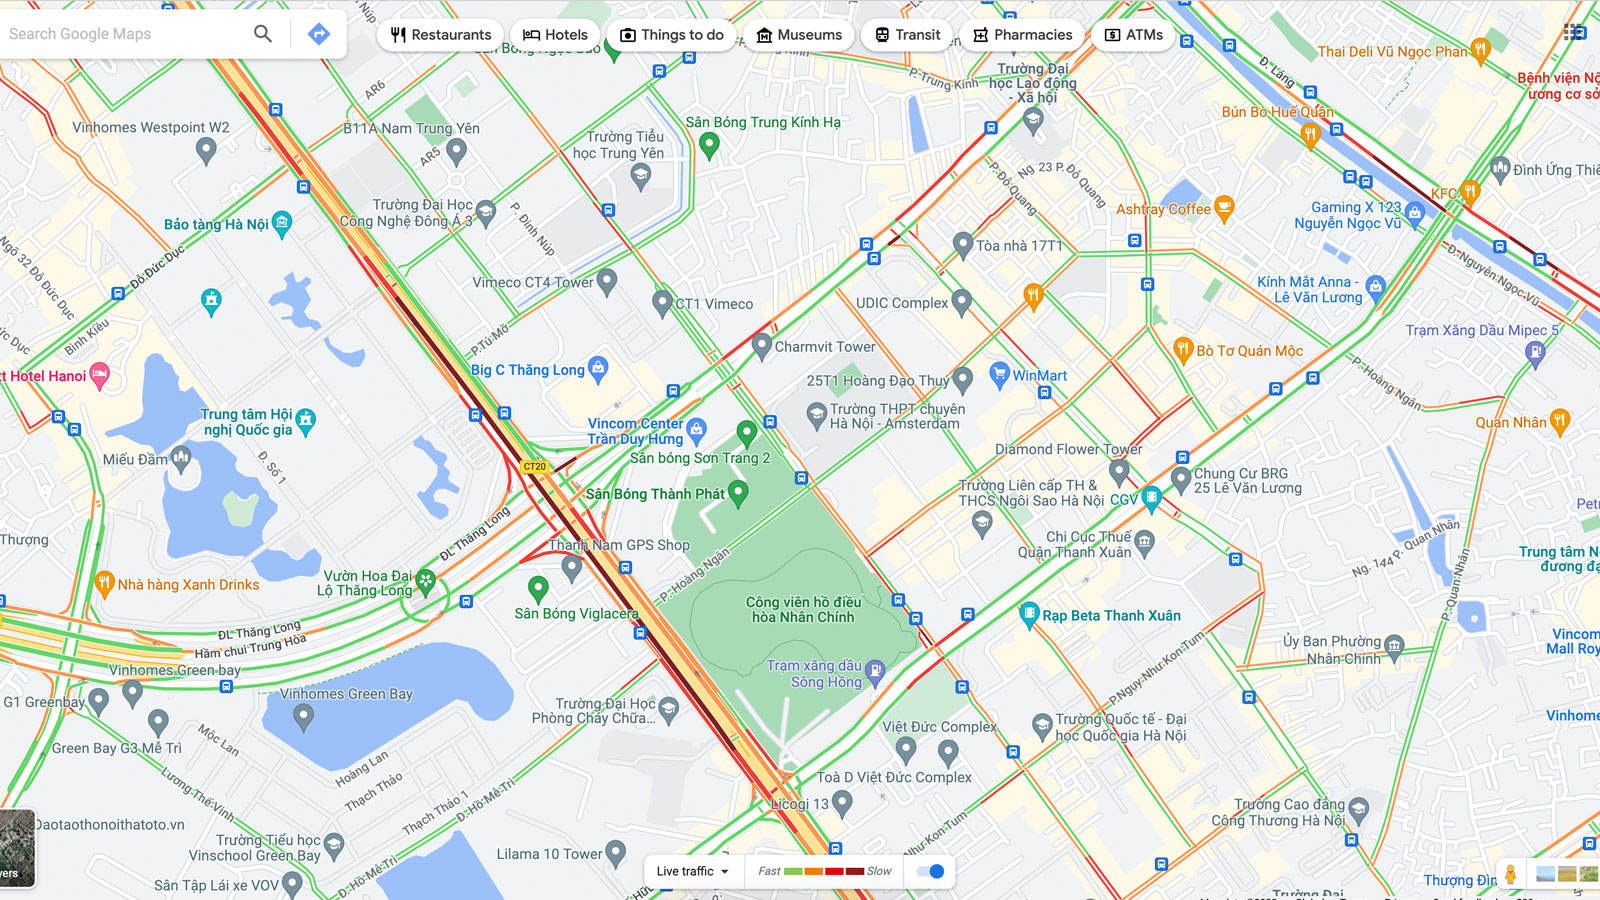 Google Maps Traffic2 